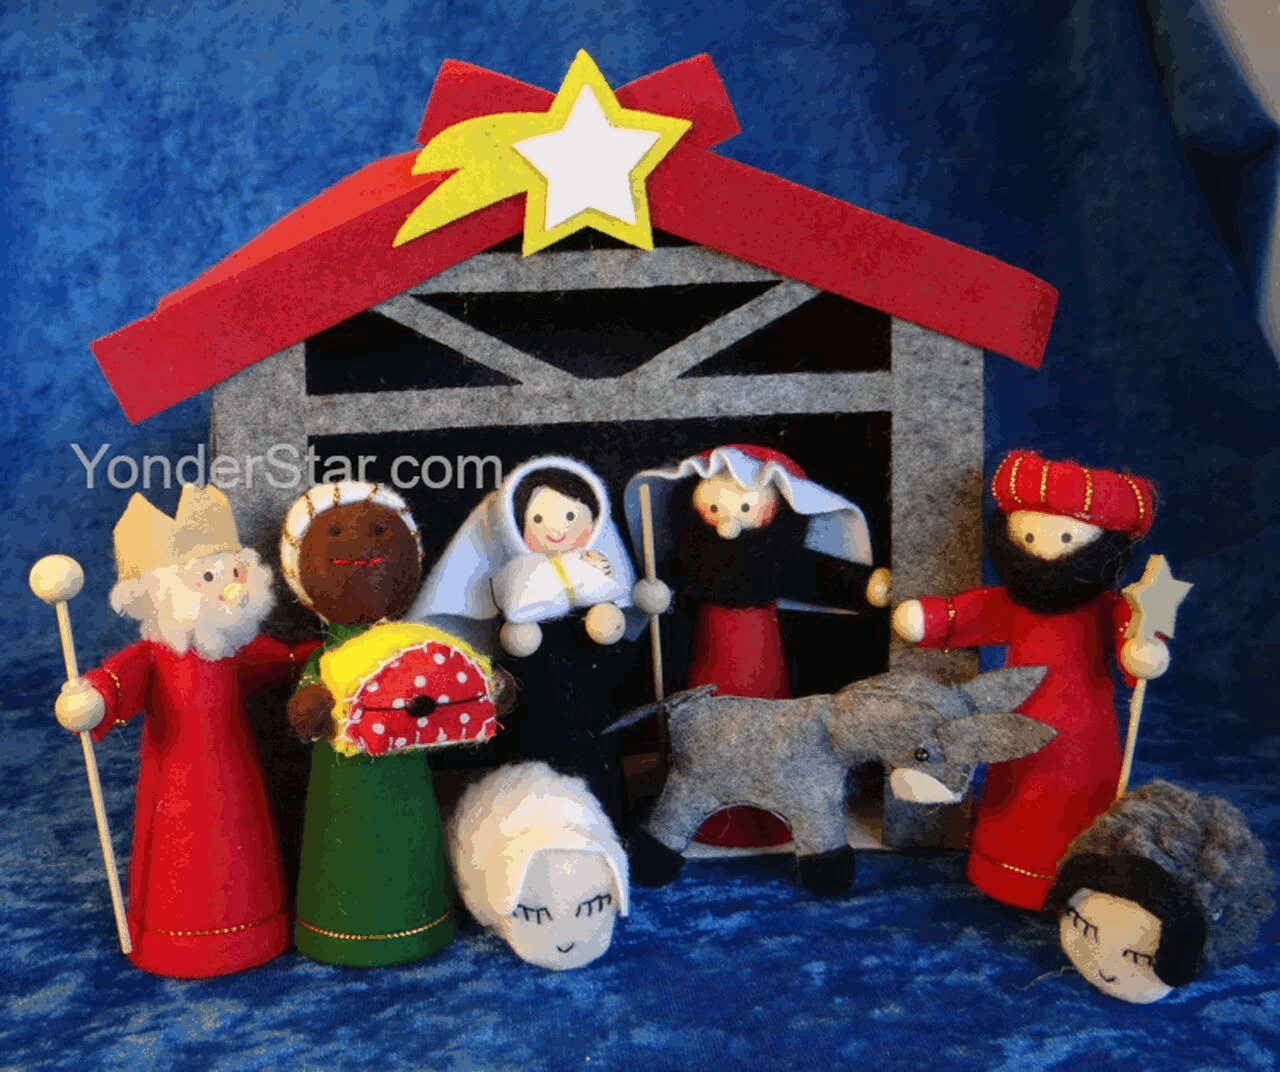 Scandinavian Nativity Scene from Denmark